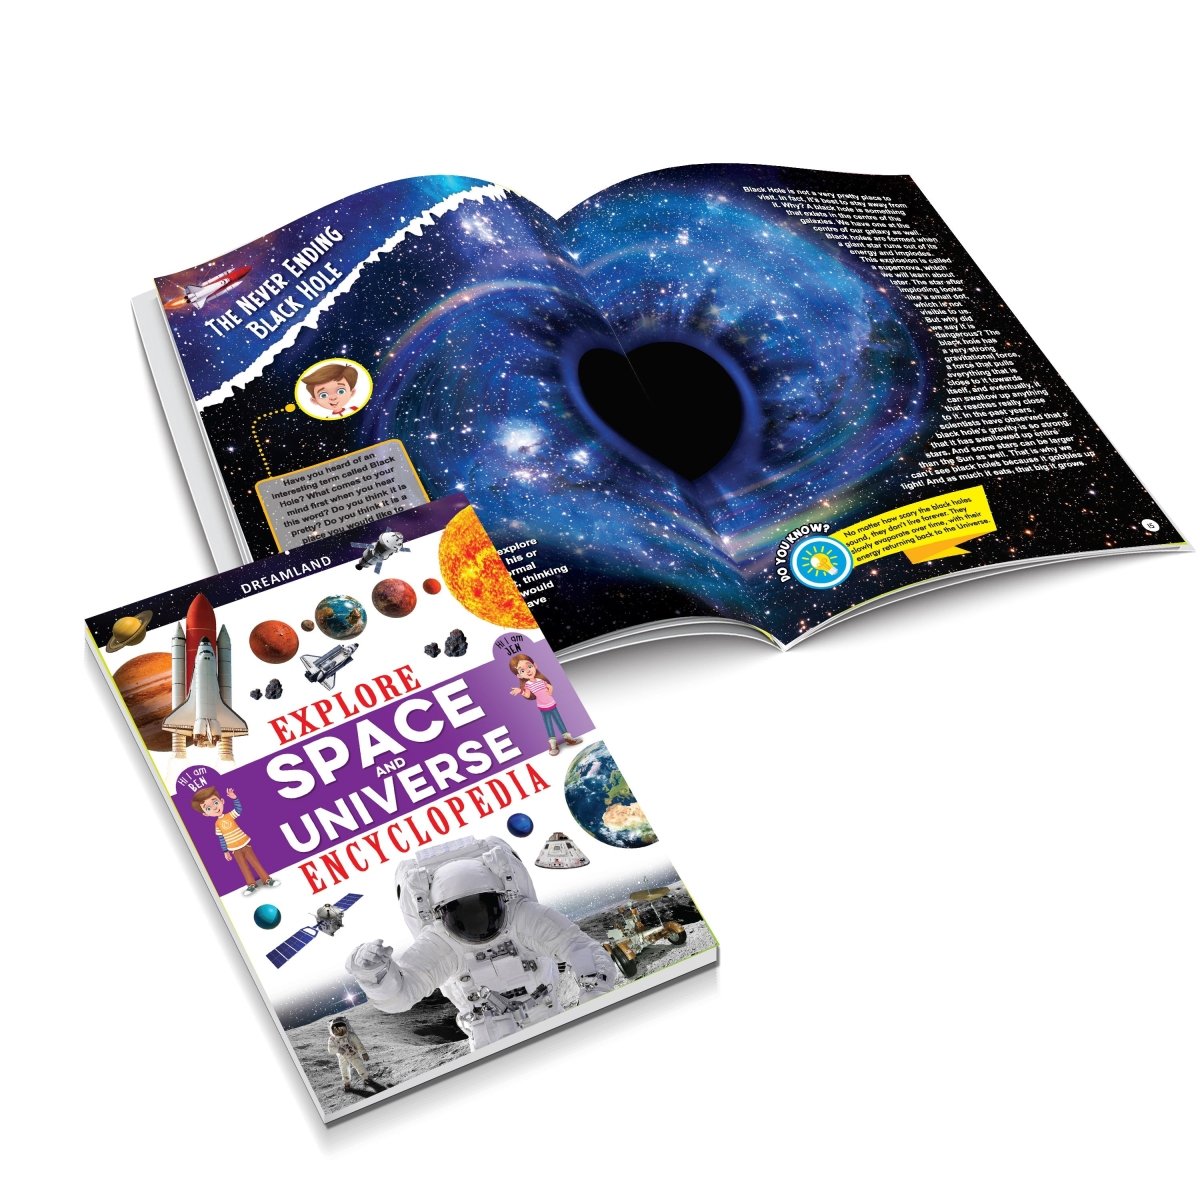 Dreamland Publications Explore Space & Universe Encyclopedia - 9789395588393